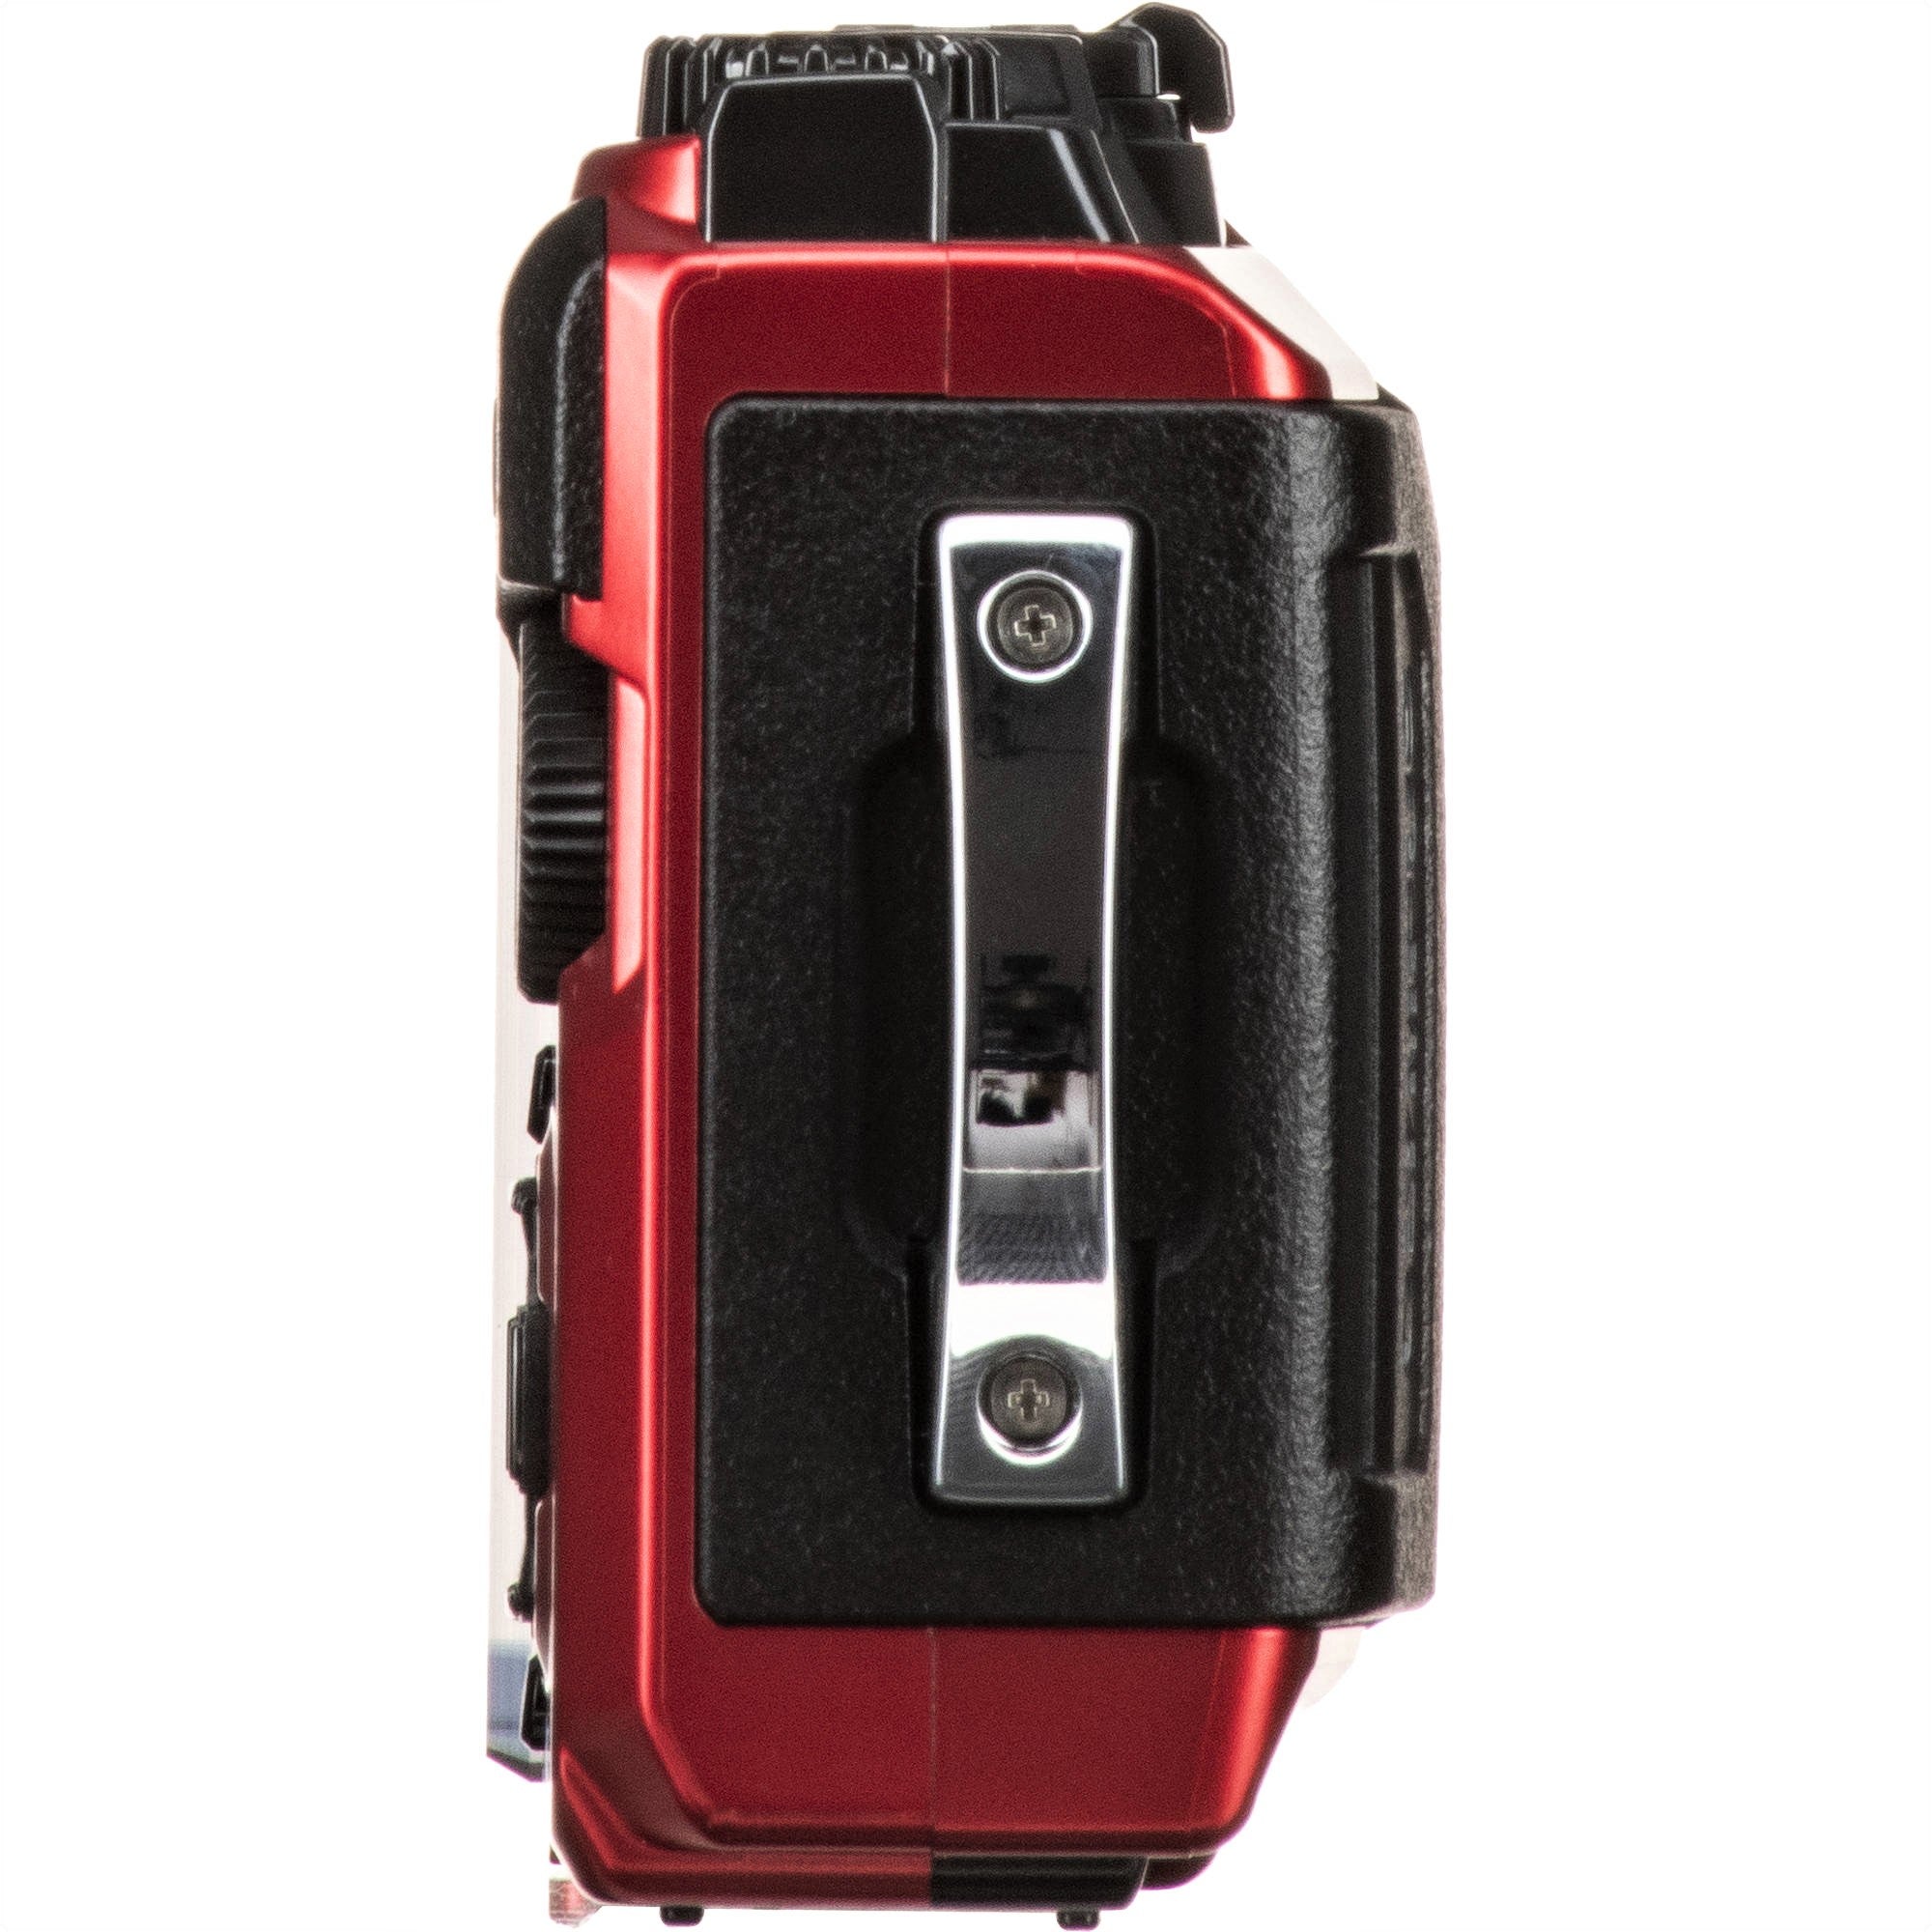 Olympus Tough TG-6 Digital Camera (Red) - Side View